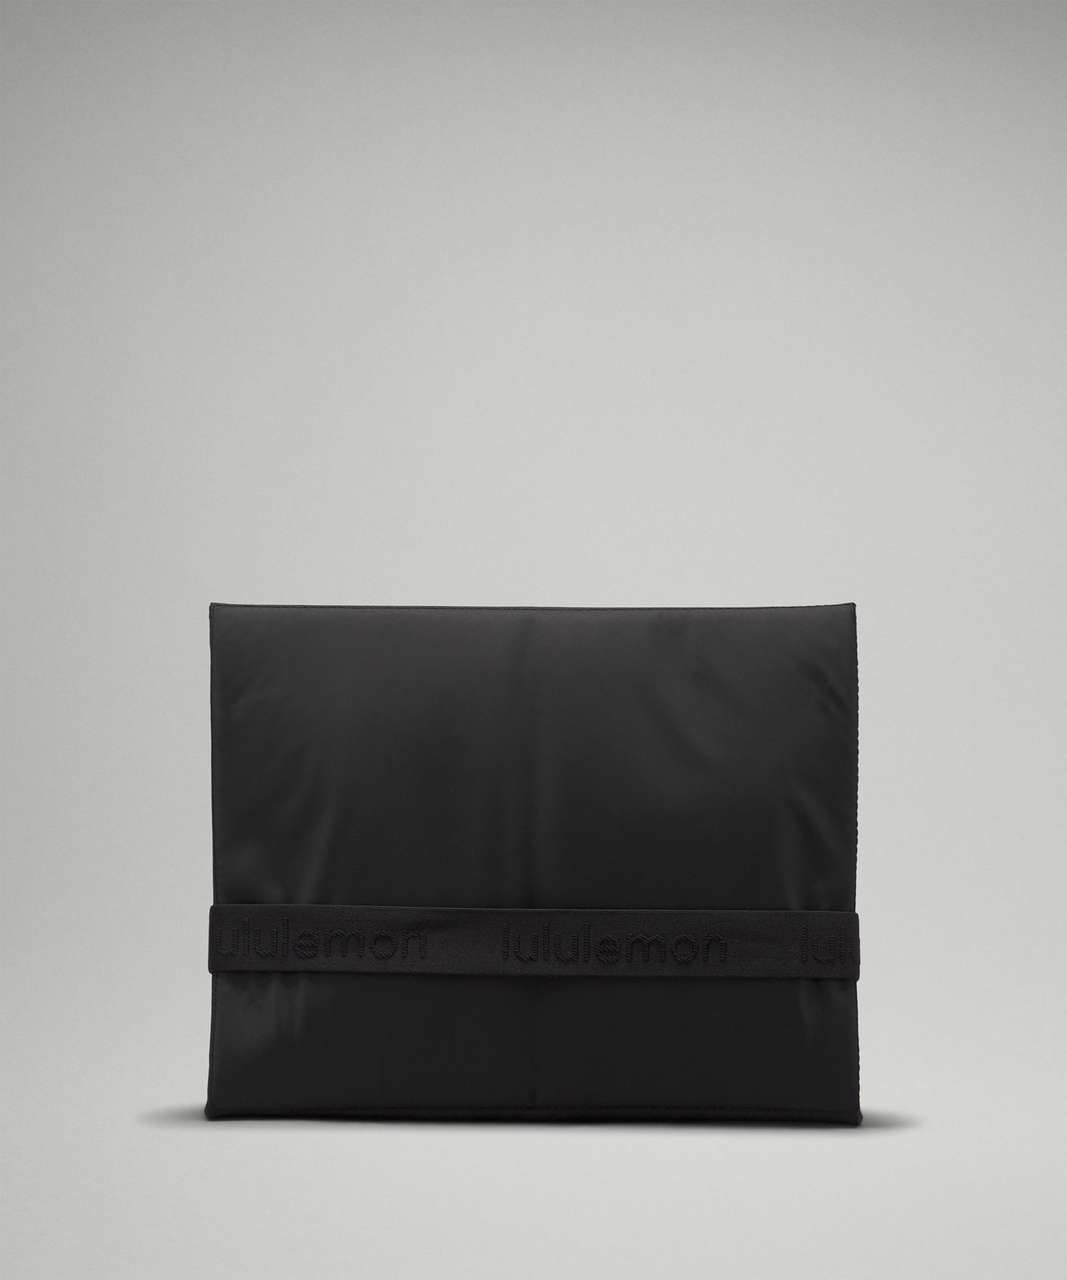 Lululemon New Parent Backpack 17L - Black / Silver Drop (First Release)